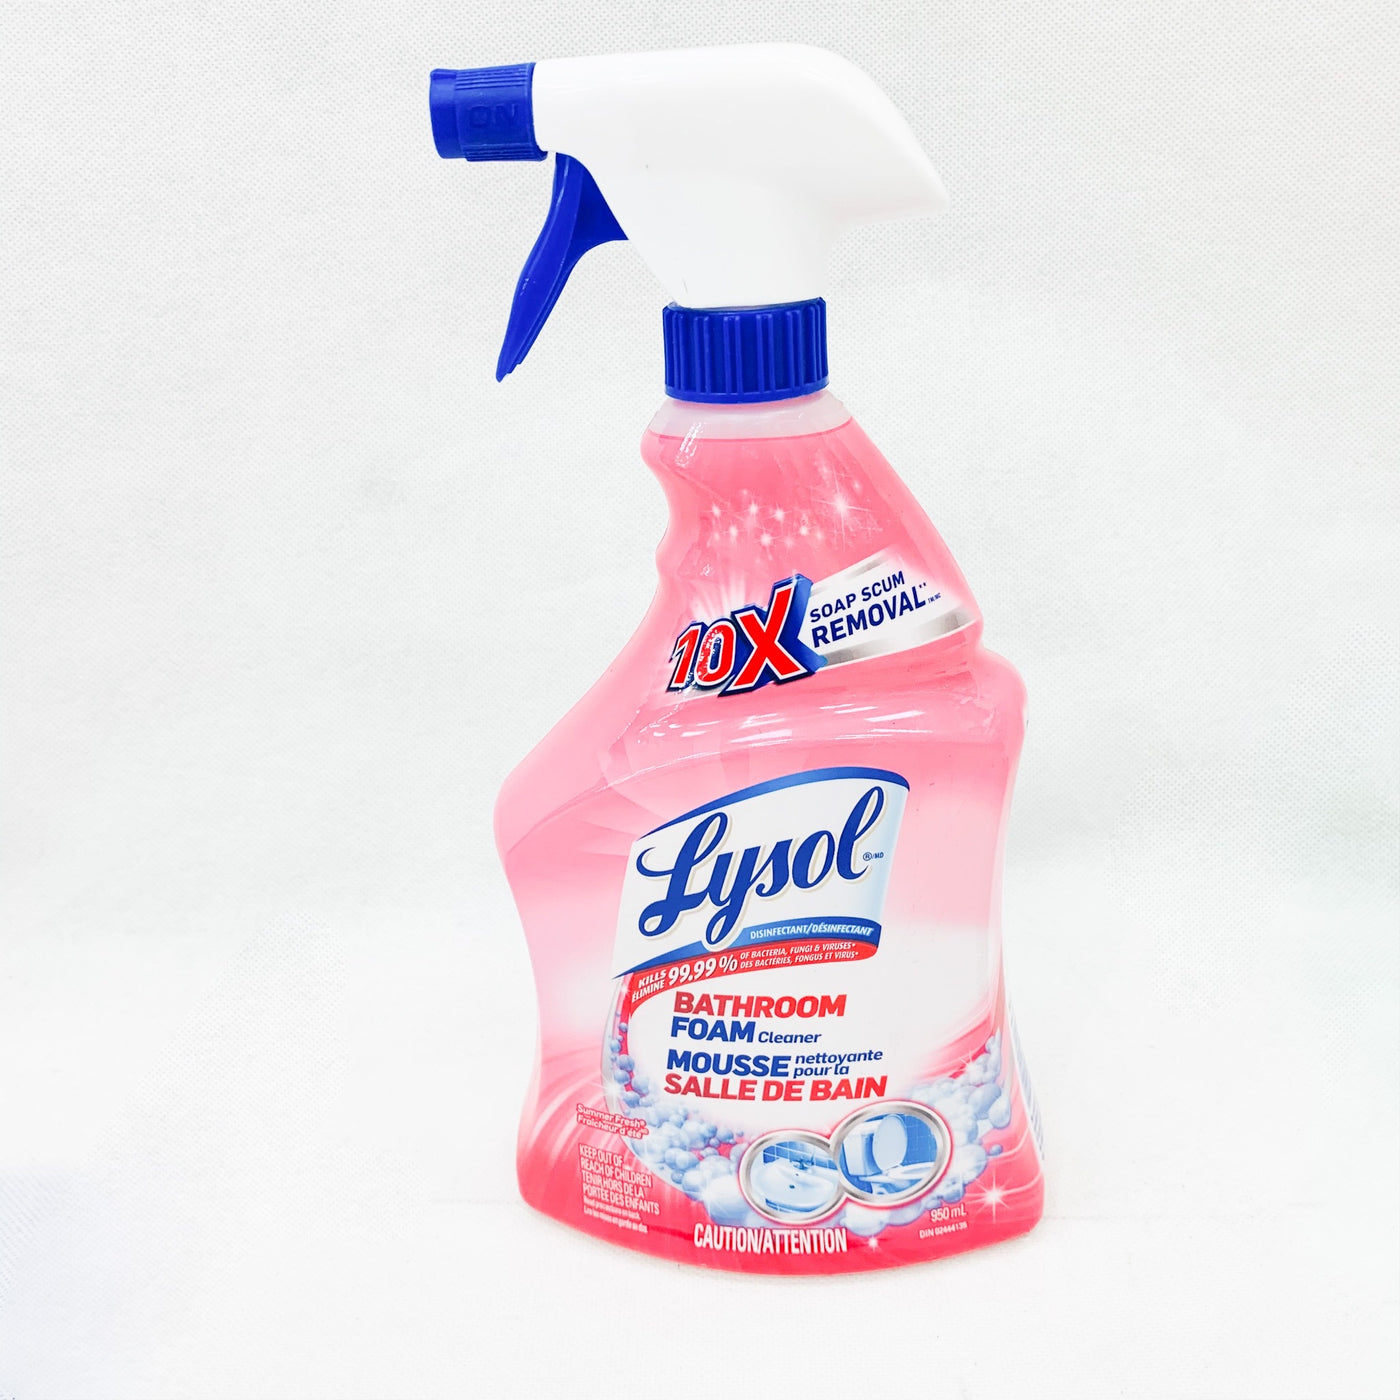 Lysol Bathroom Foam Cleaner